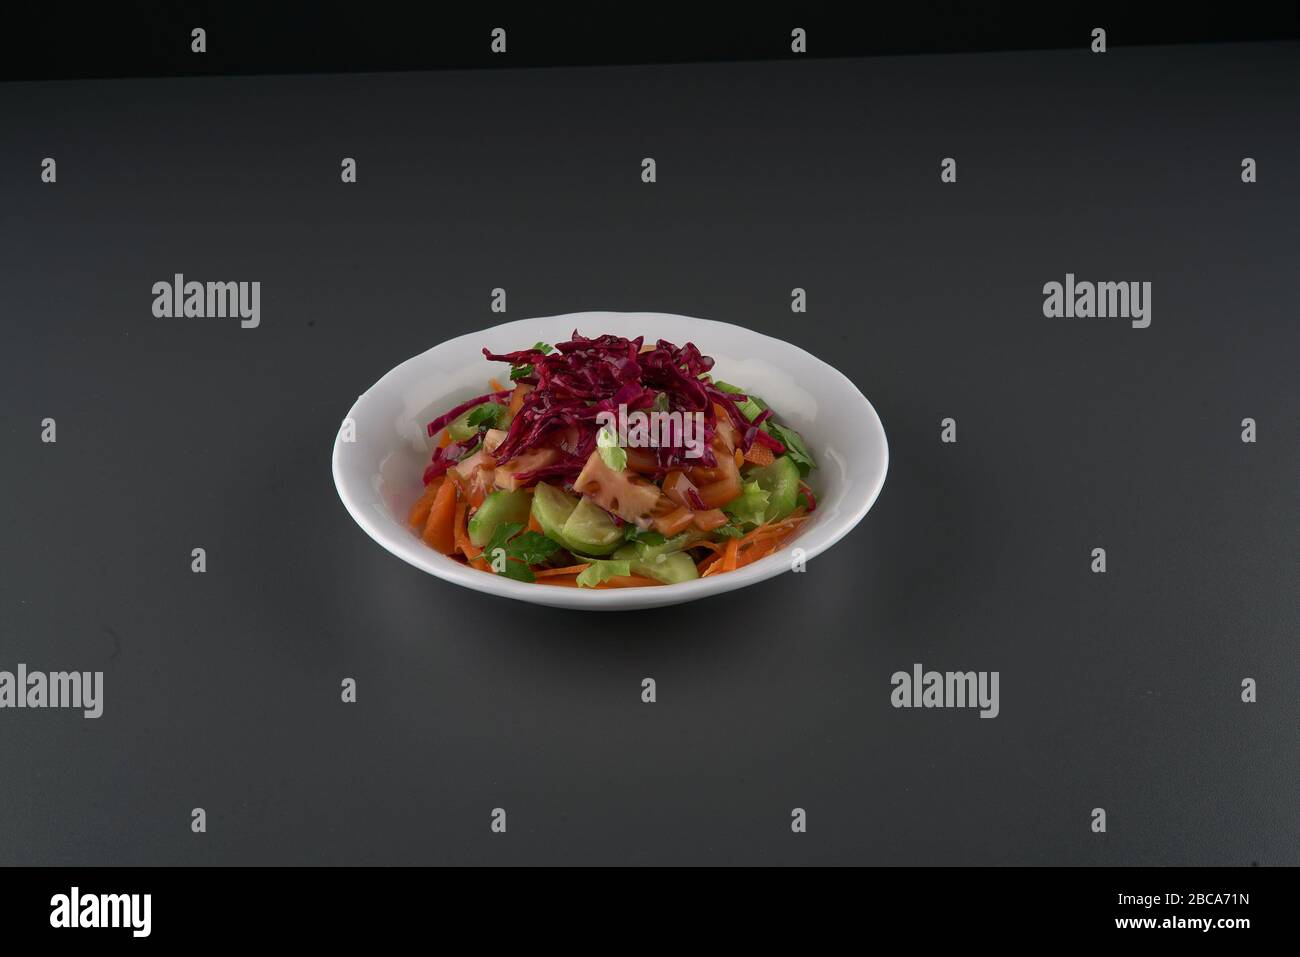 salad on dark background Stock Photo